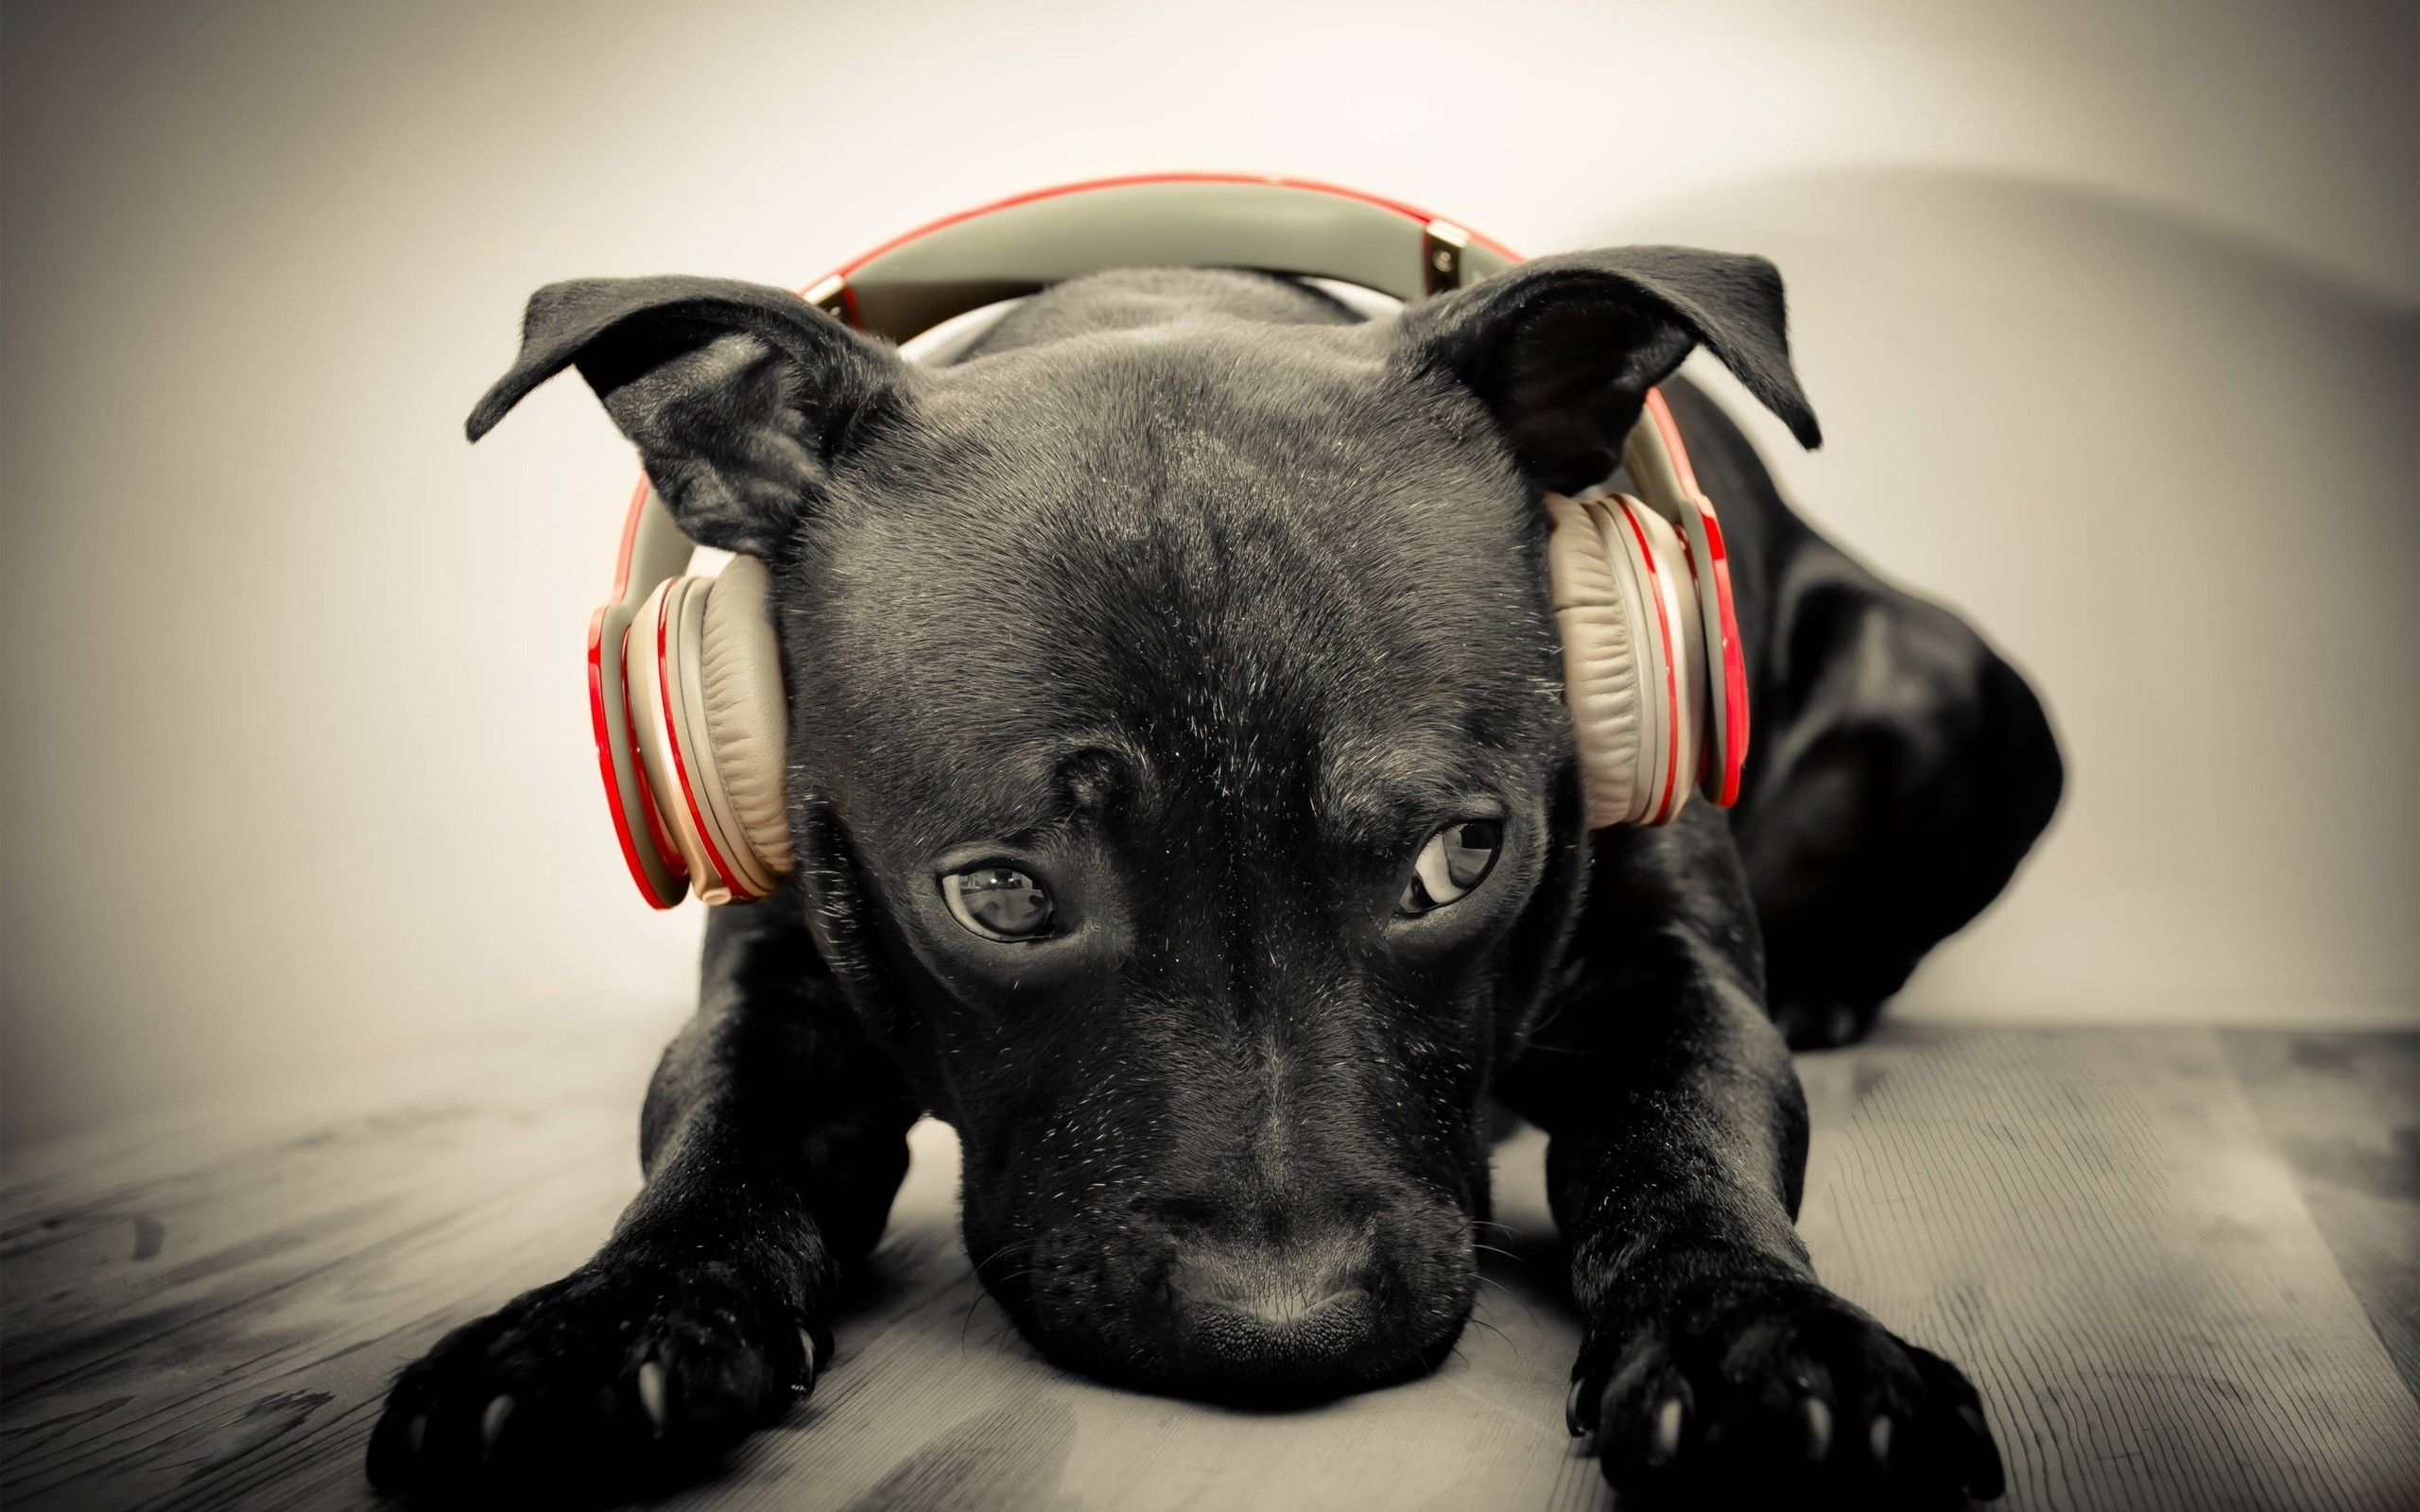 General 2560x1600 headphones Beats music dog animals mammals closeup